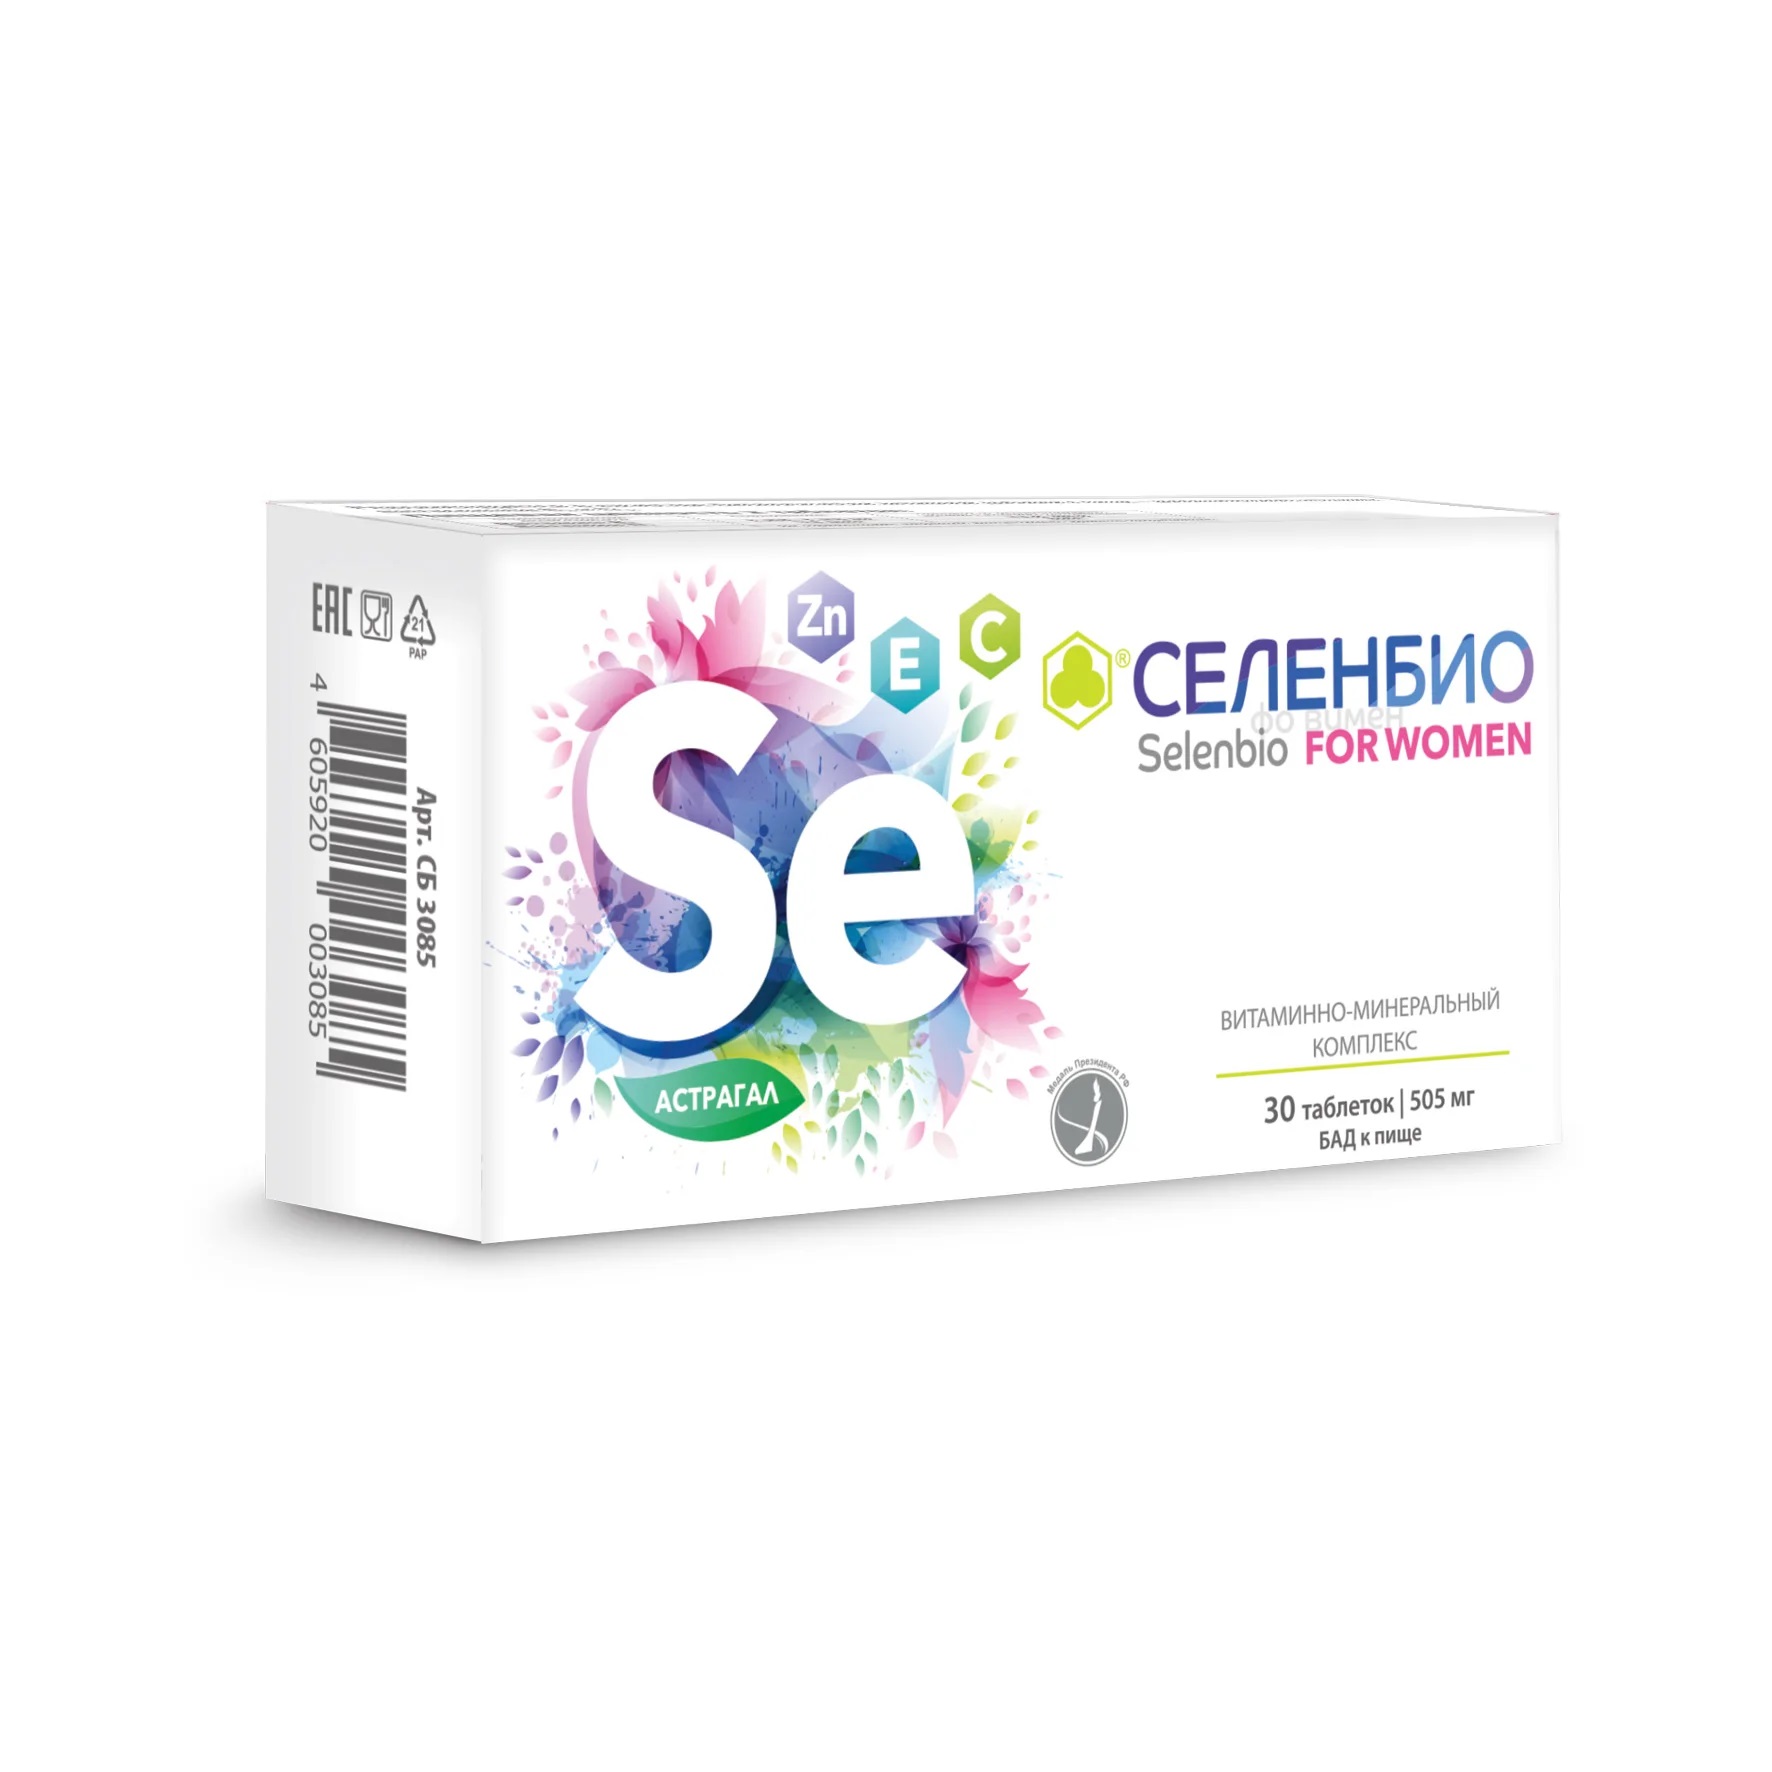 Селенбио for women, таблетки 505 мг, 30 шт. women photographers pioneers